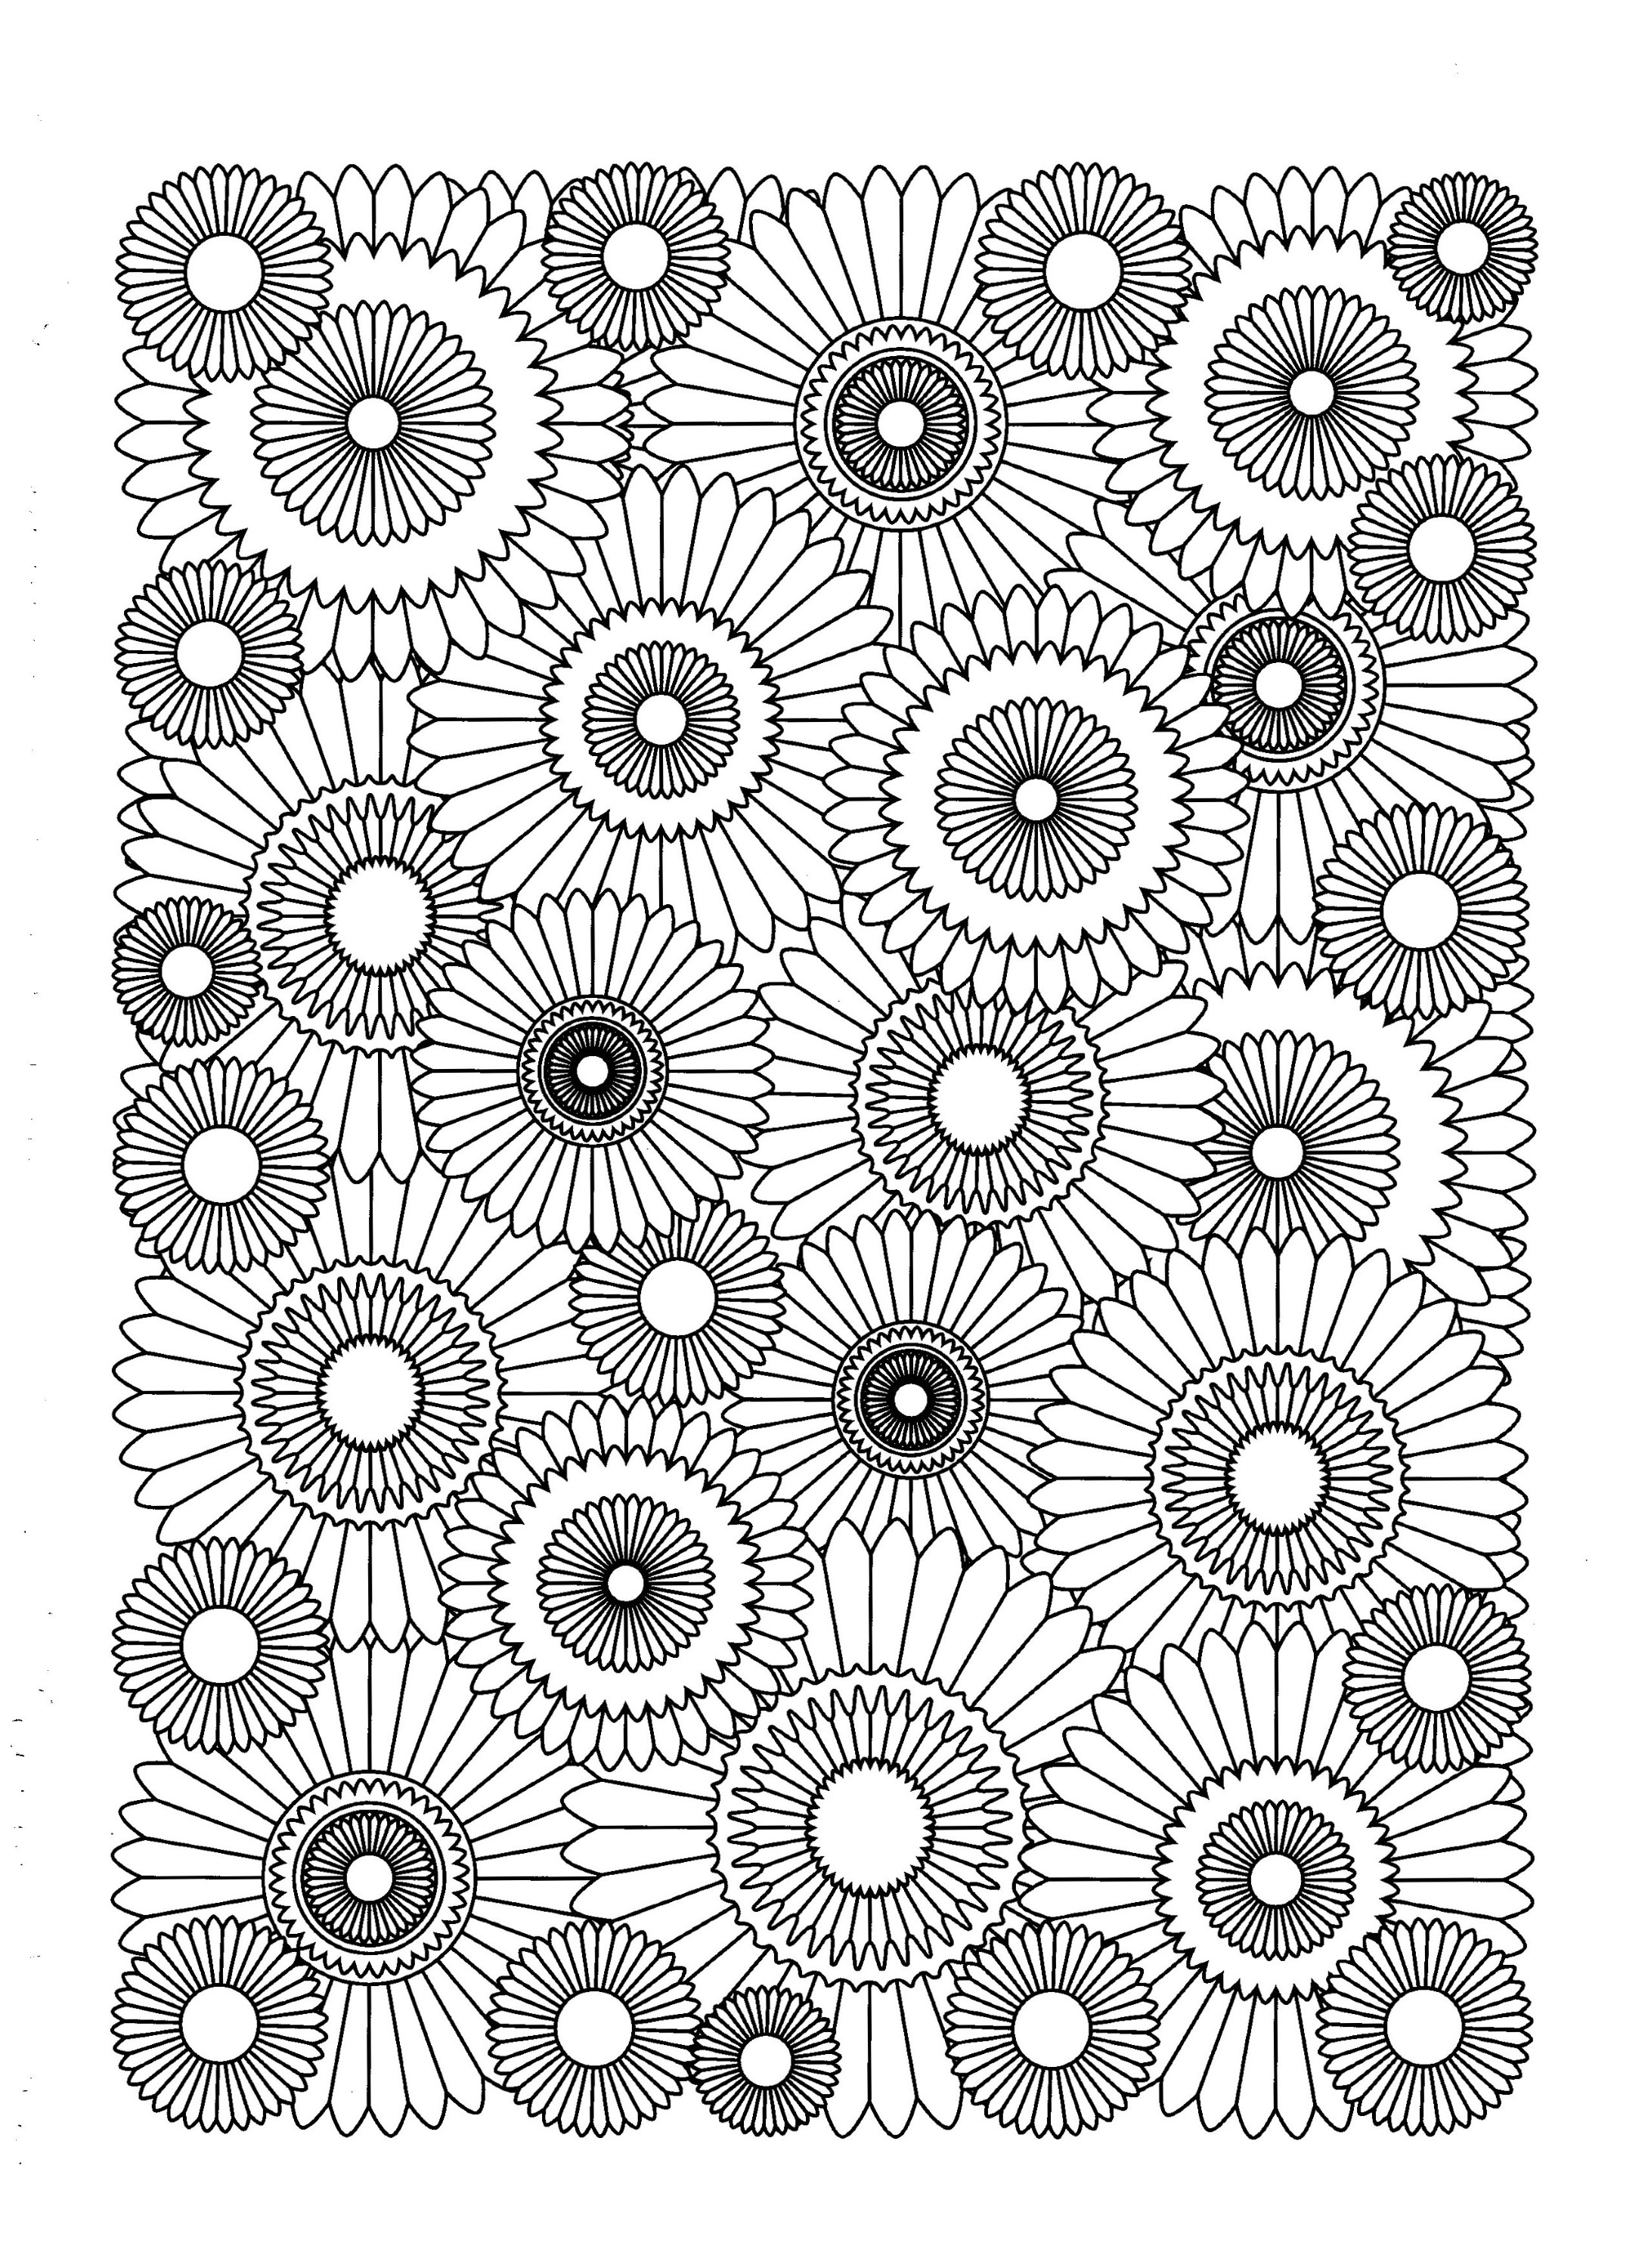 Geometric forms looking like sunflowers